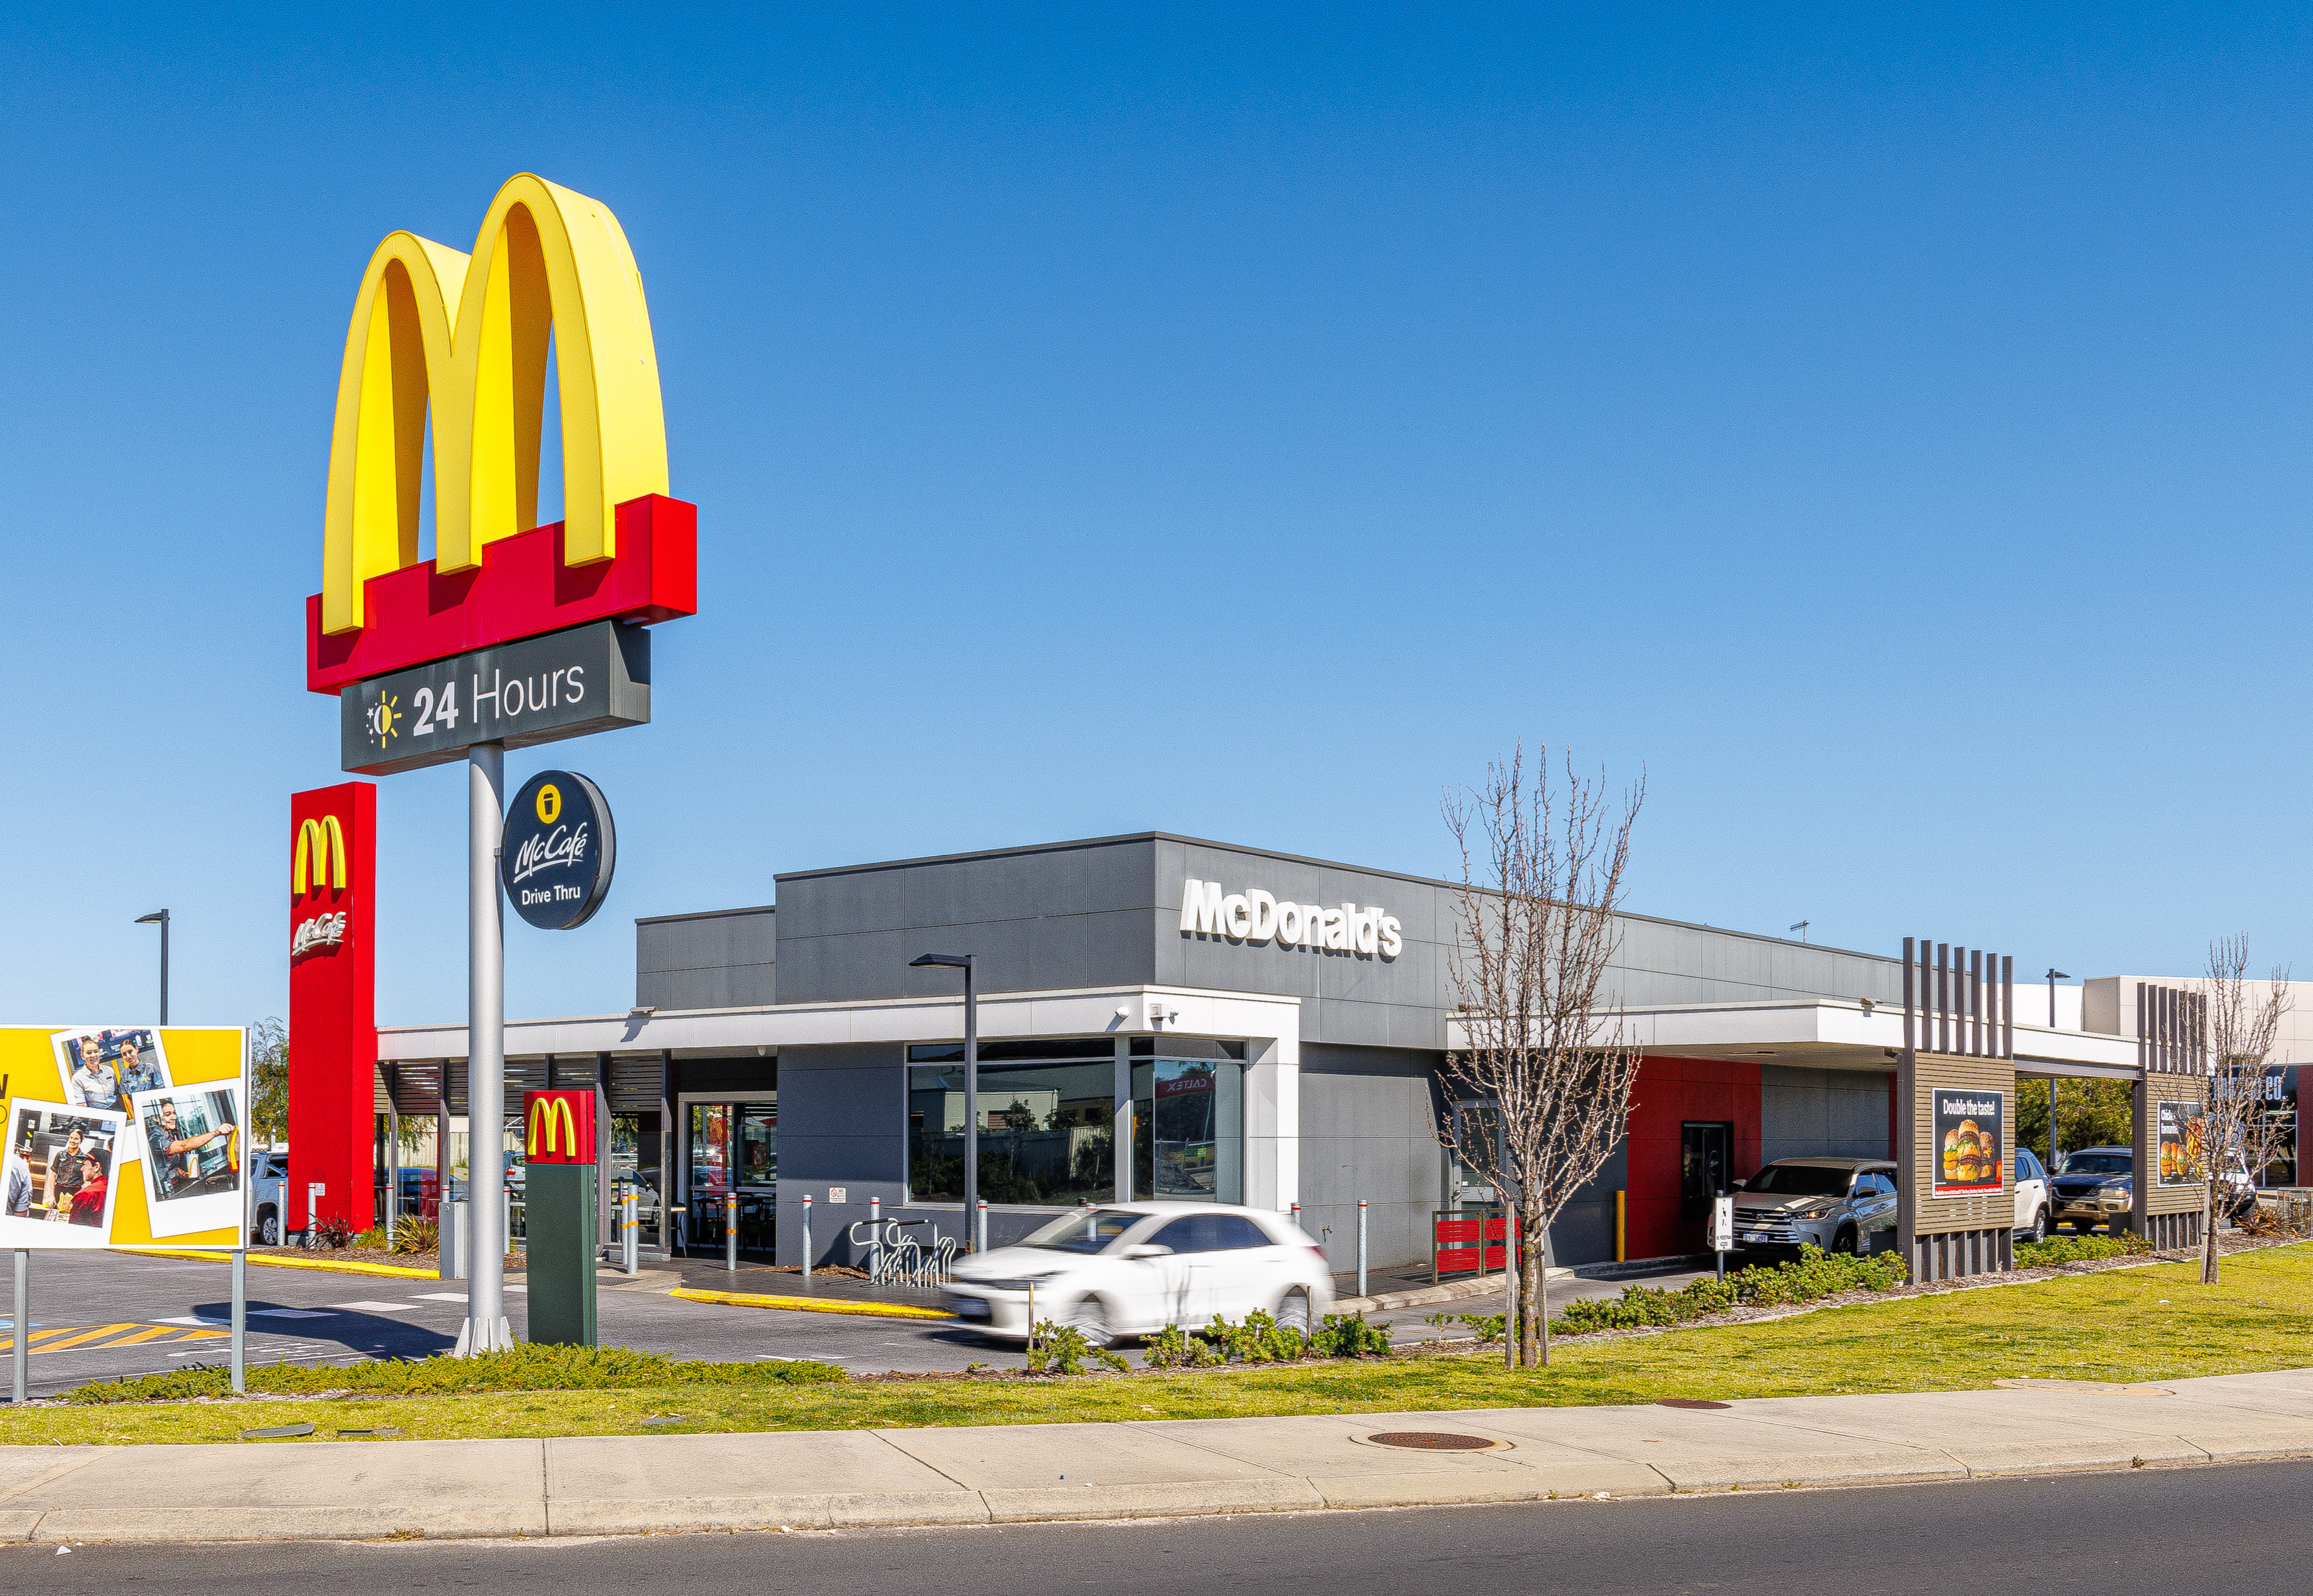 Two McDonald's restaurants headline Stonebridge's October National Portfolio